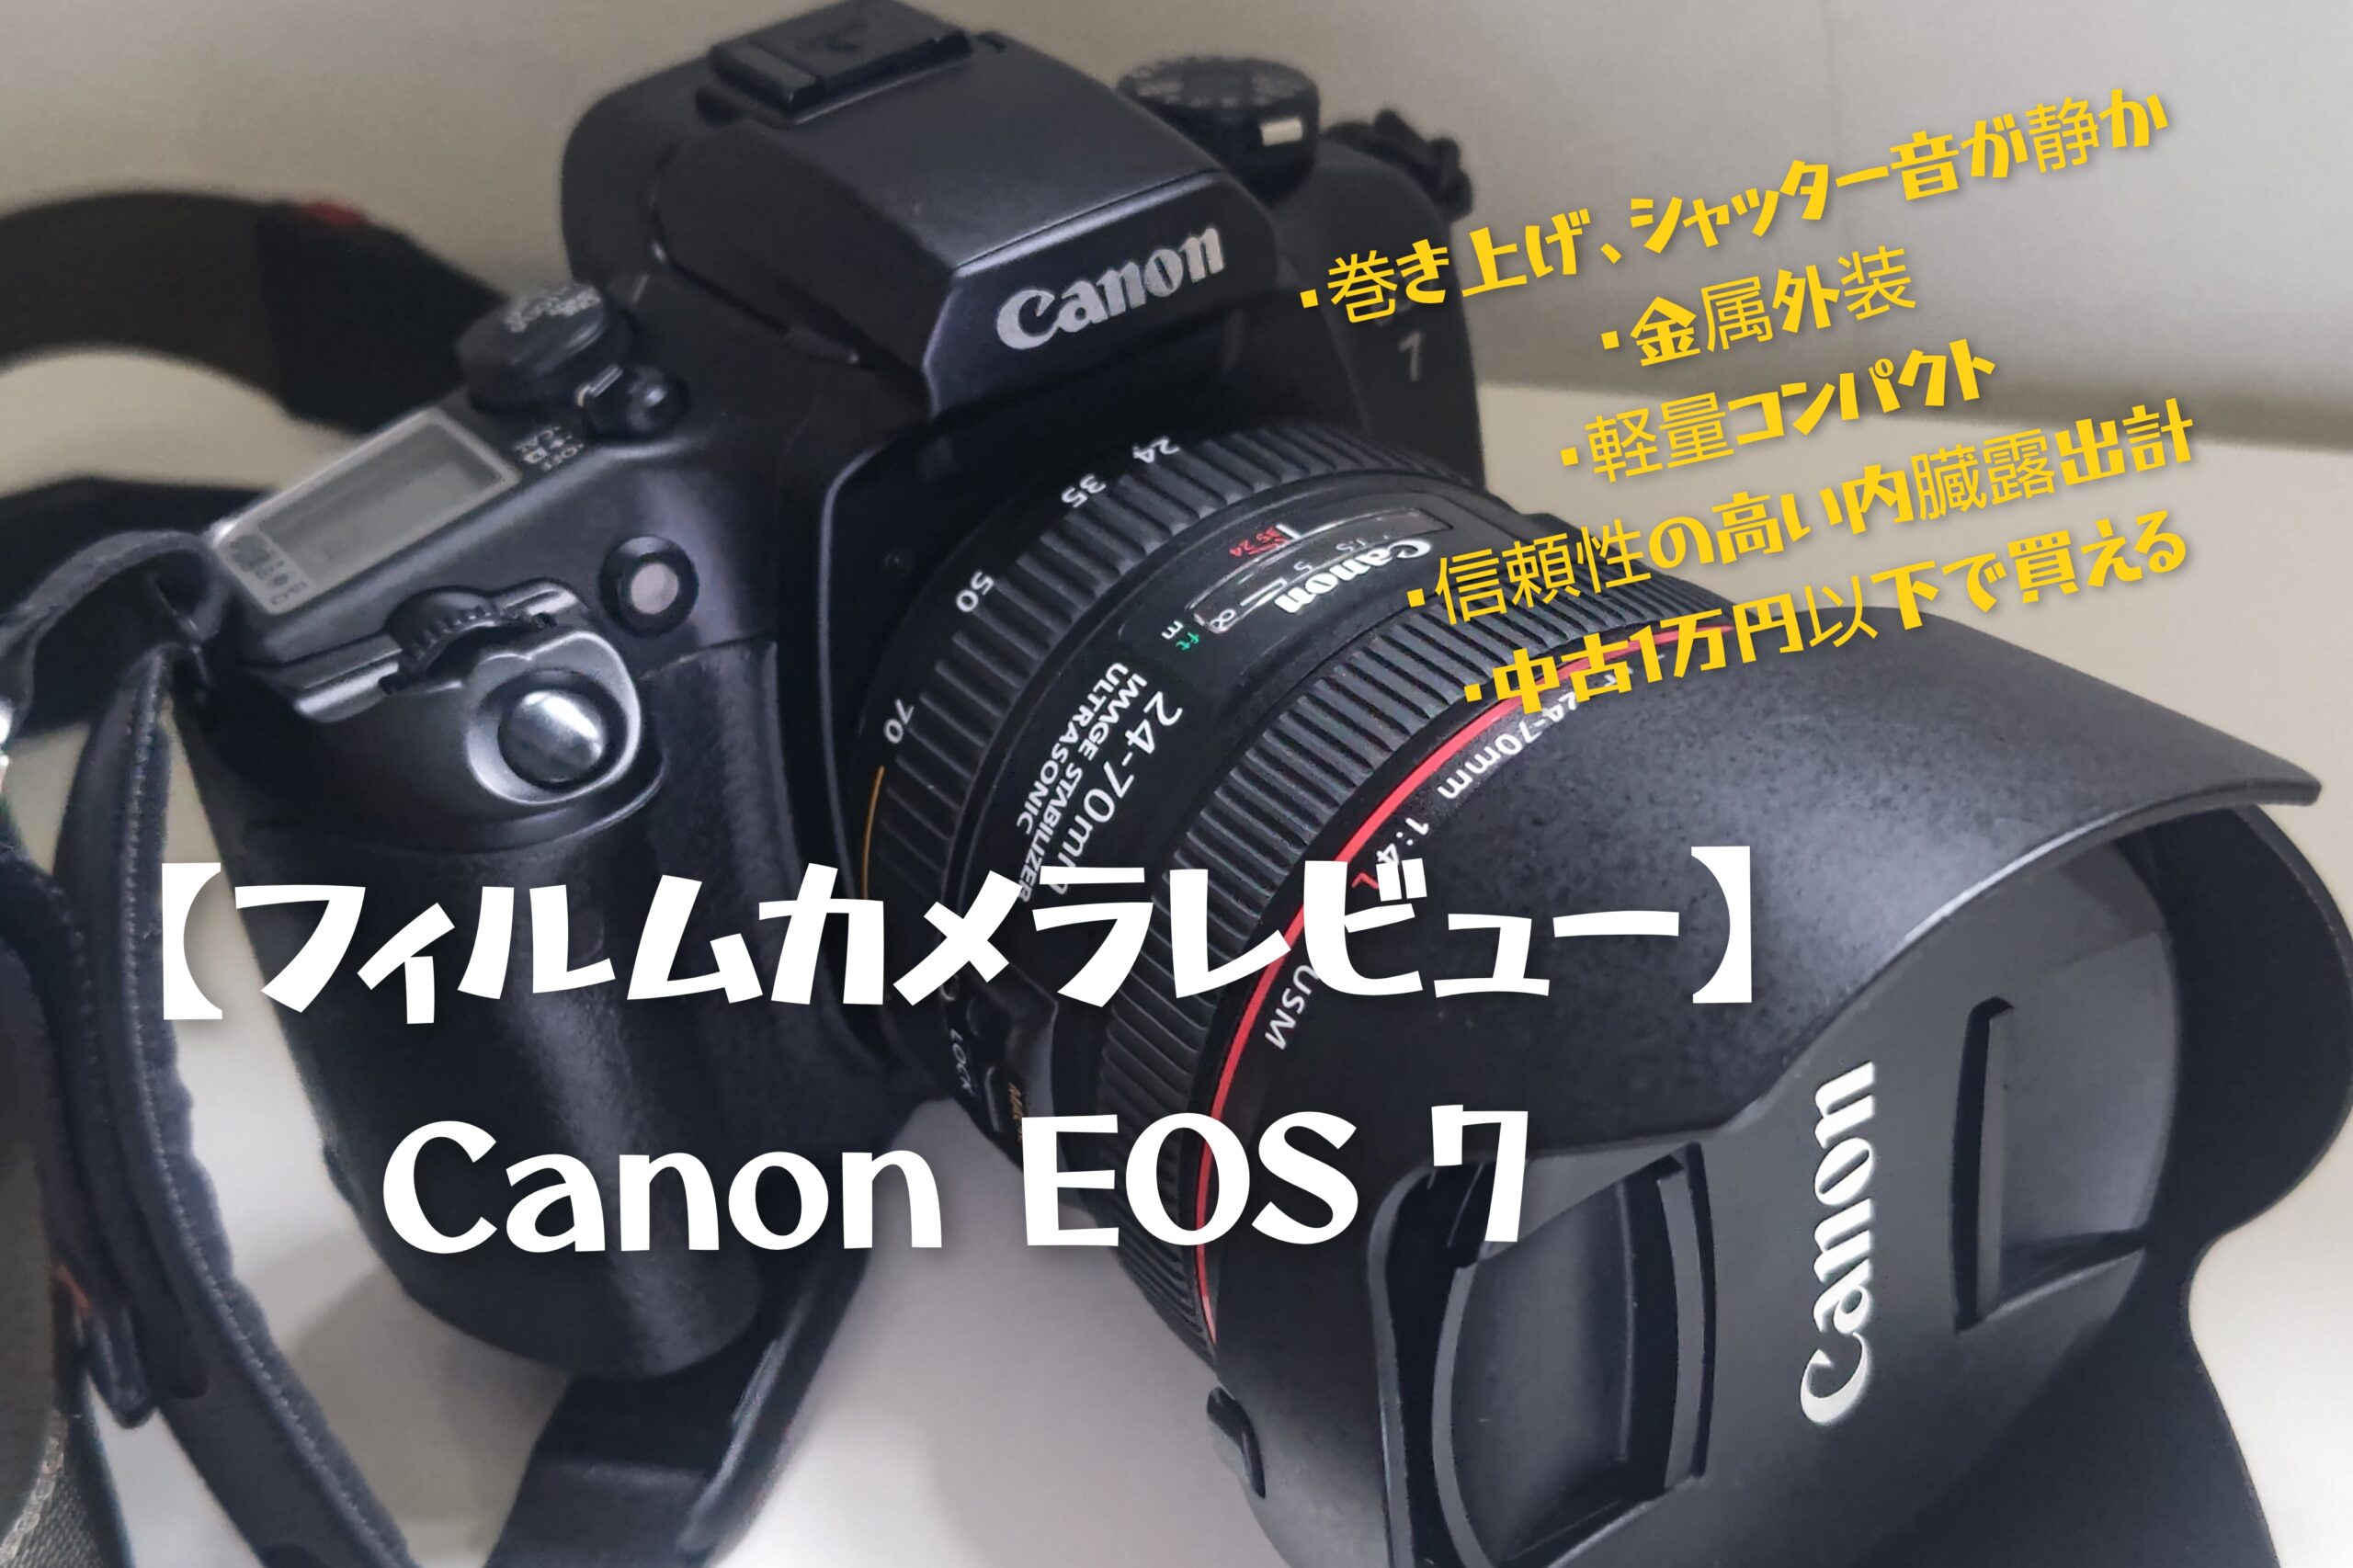 Canon EOS 7S フィルムカメラ 本体